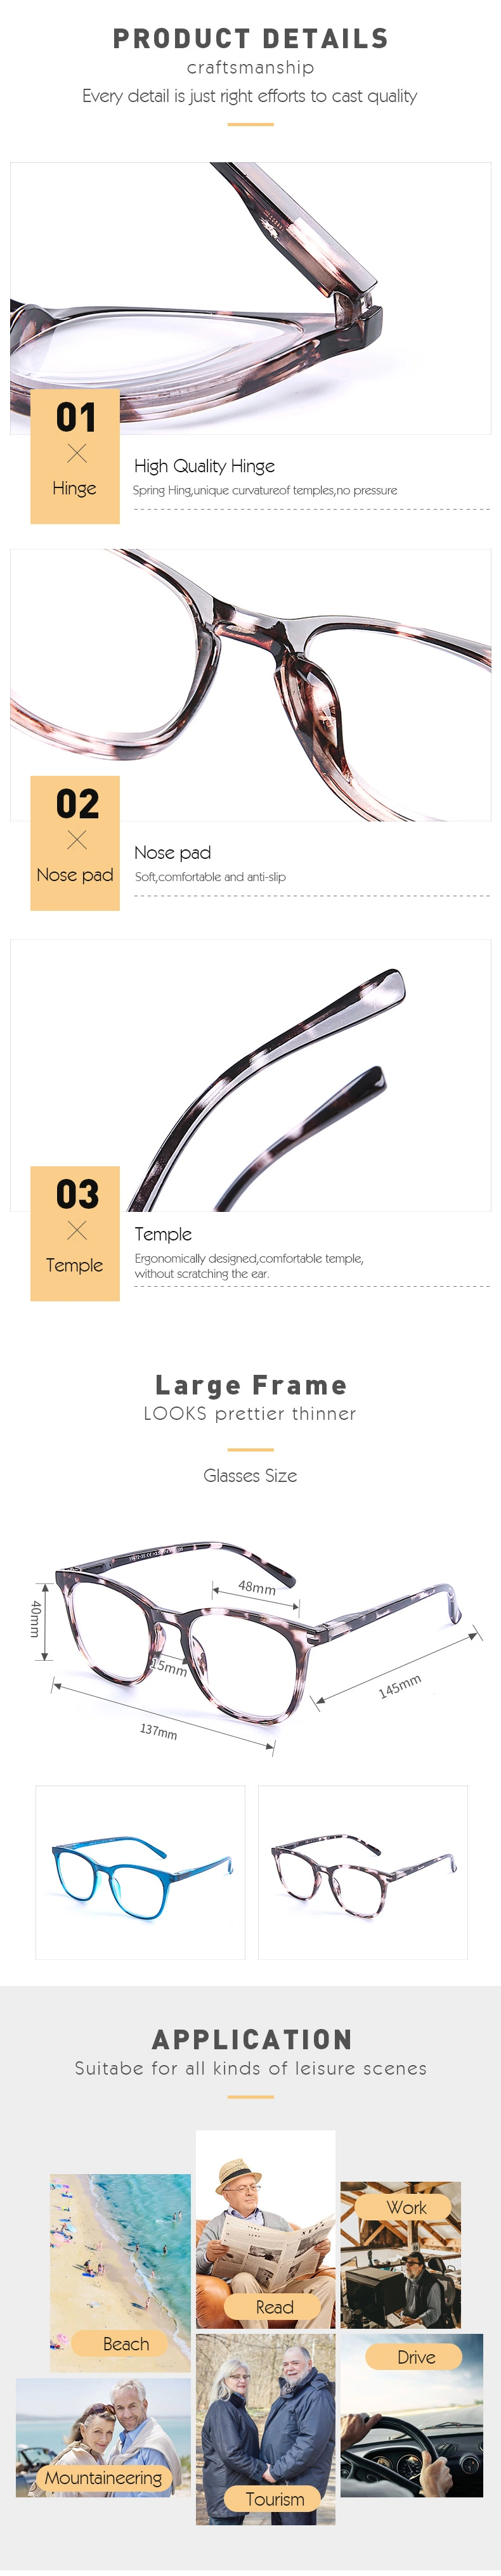 Wholesale New Fashion Retro Trendy Luxury High Colorful Reading Glasses for Unisex